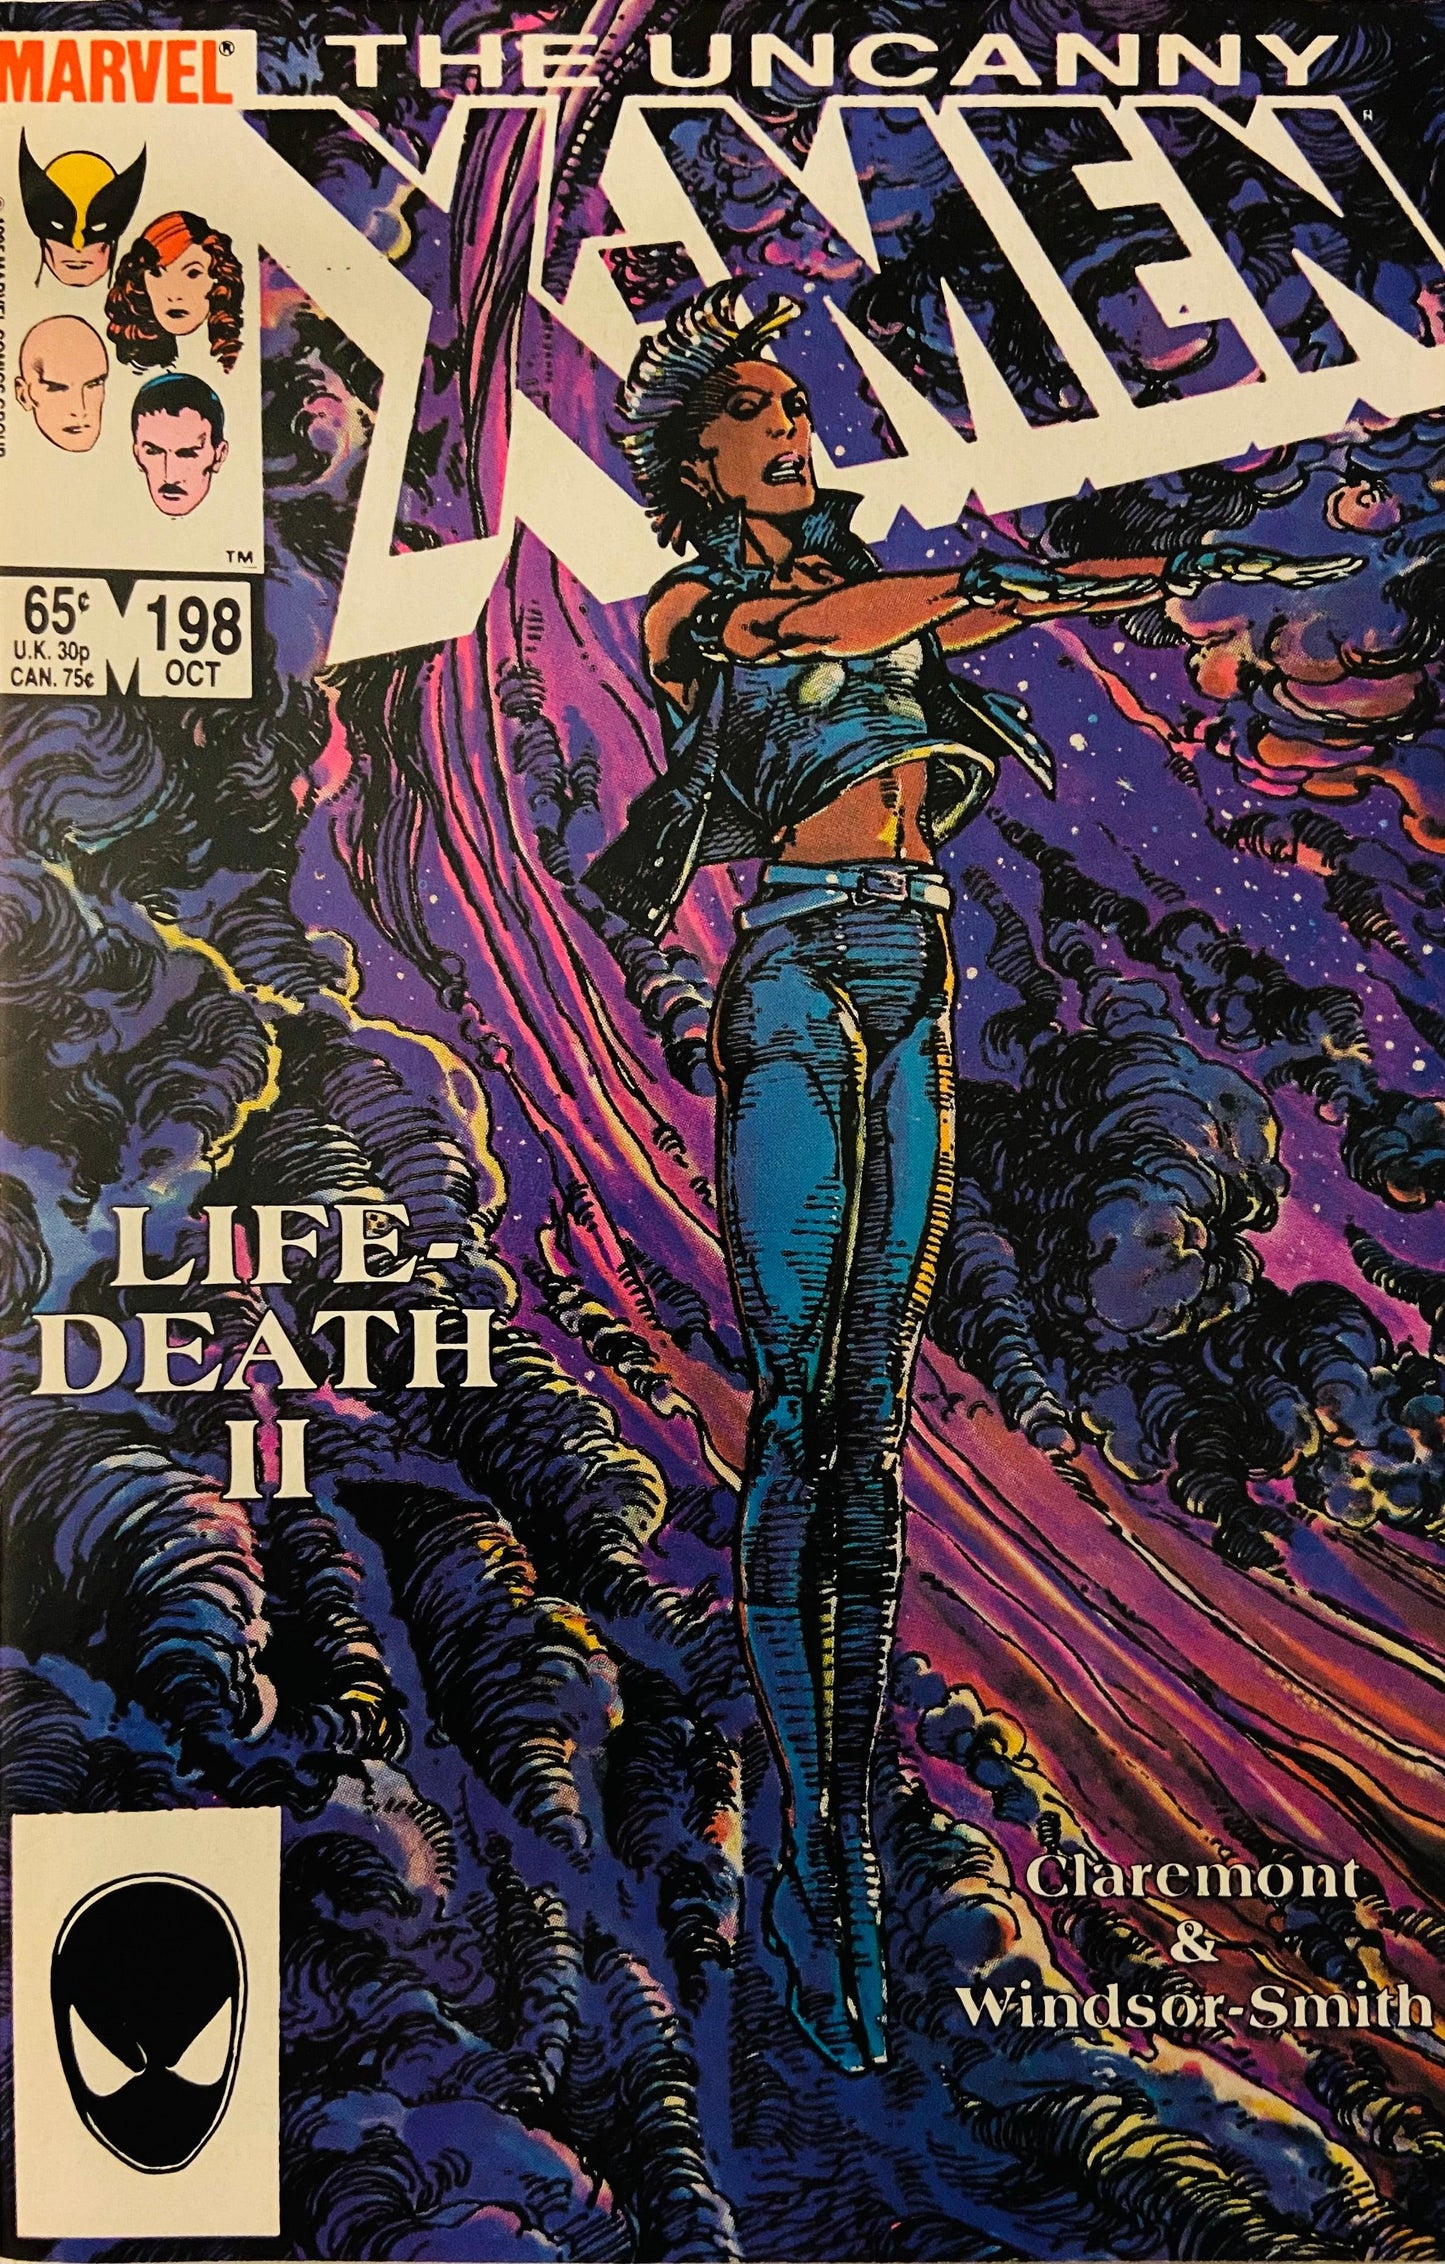 Uncanny X-men #198 - HolyGrail Comix